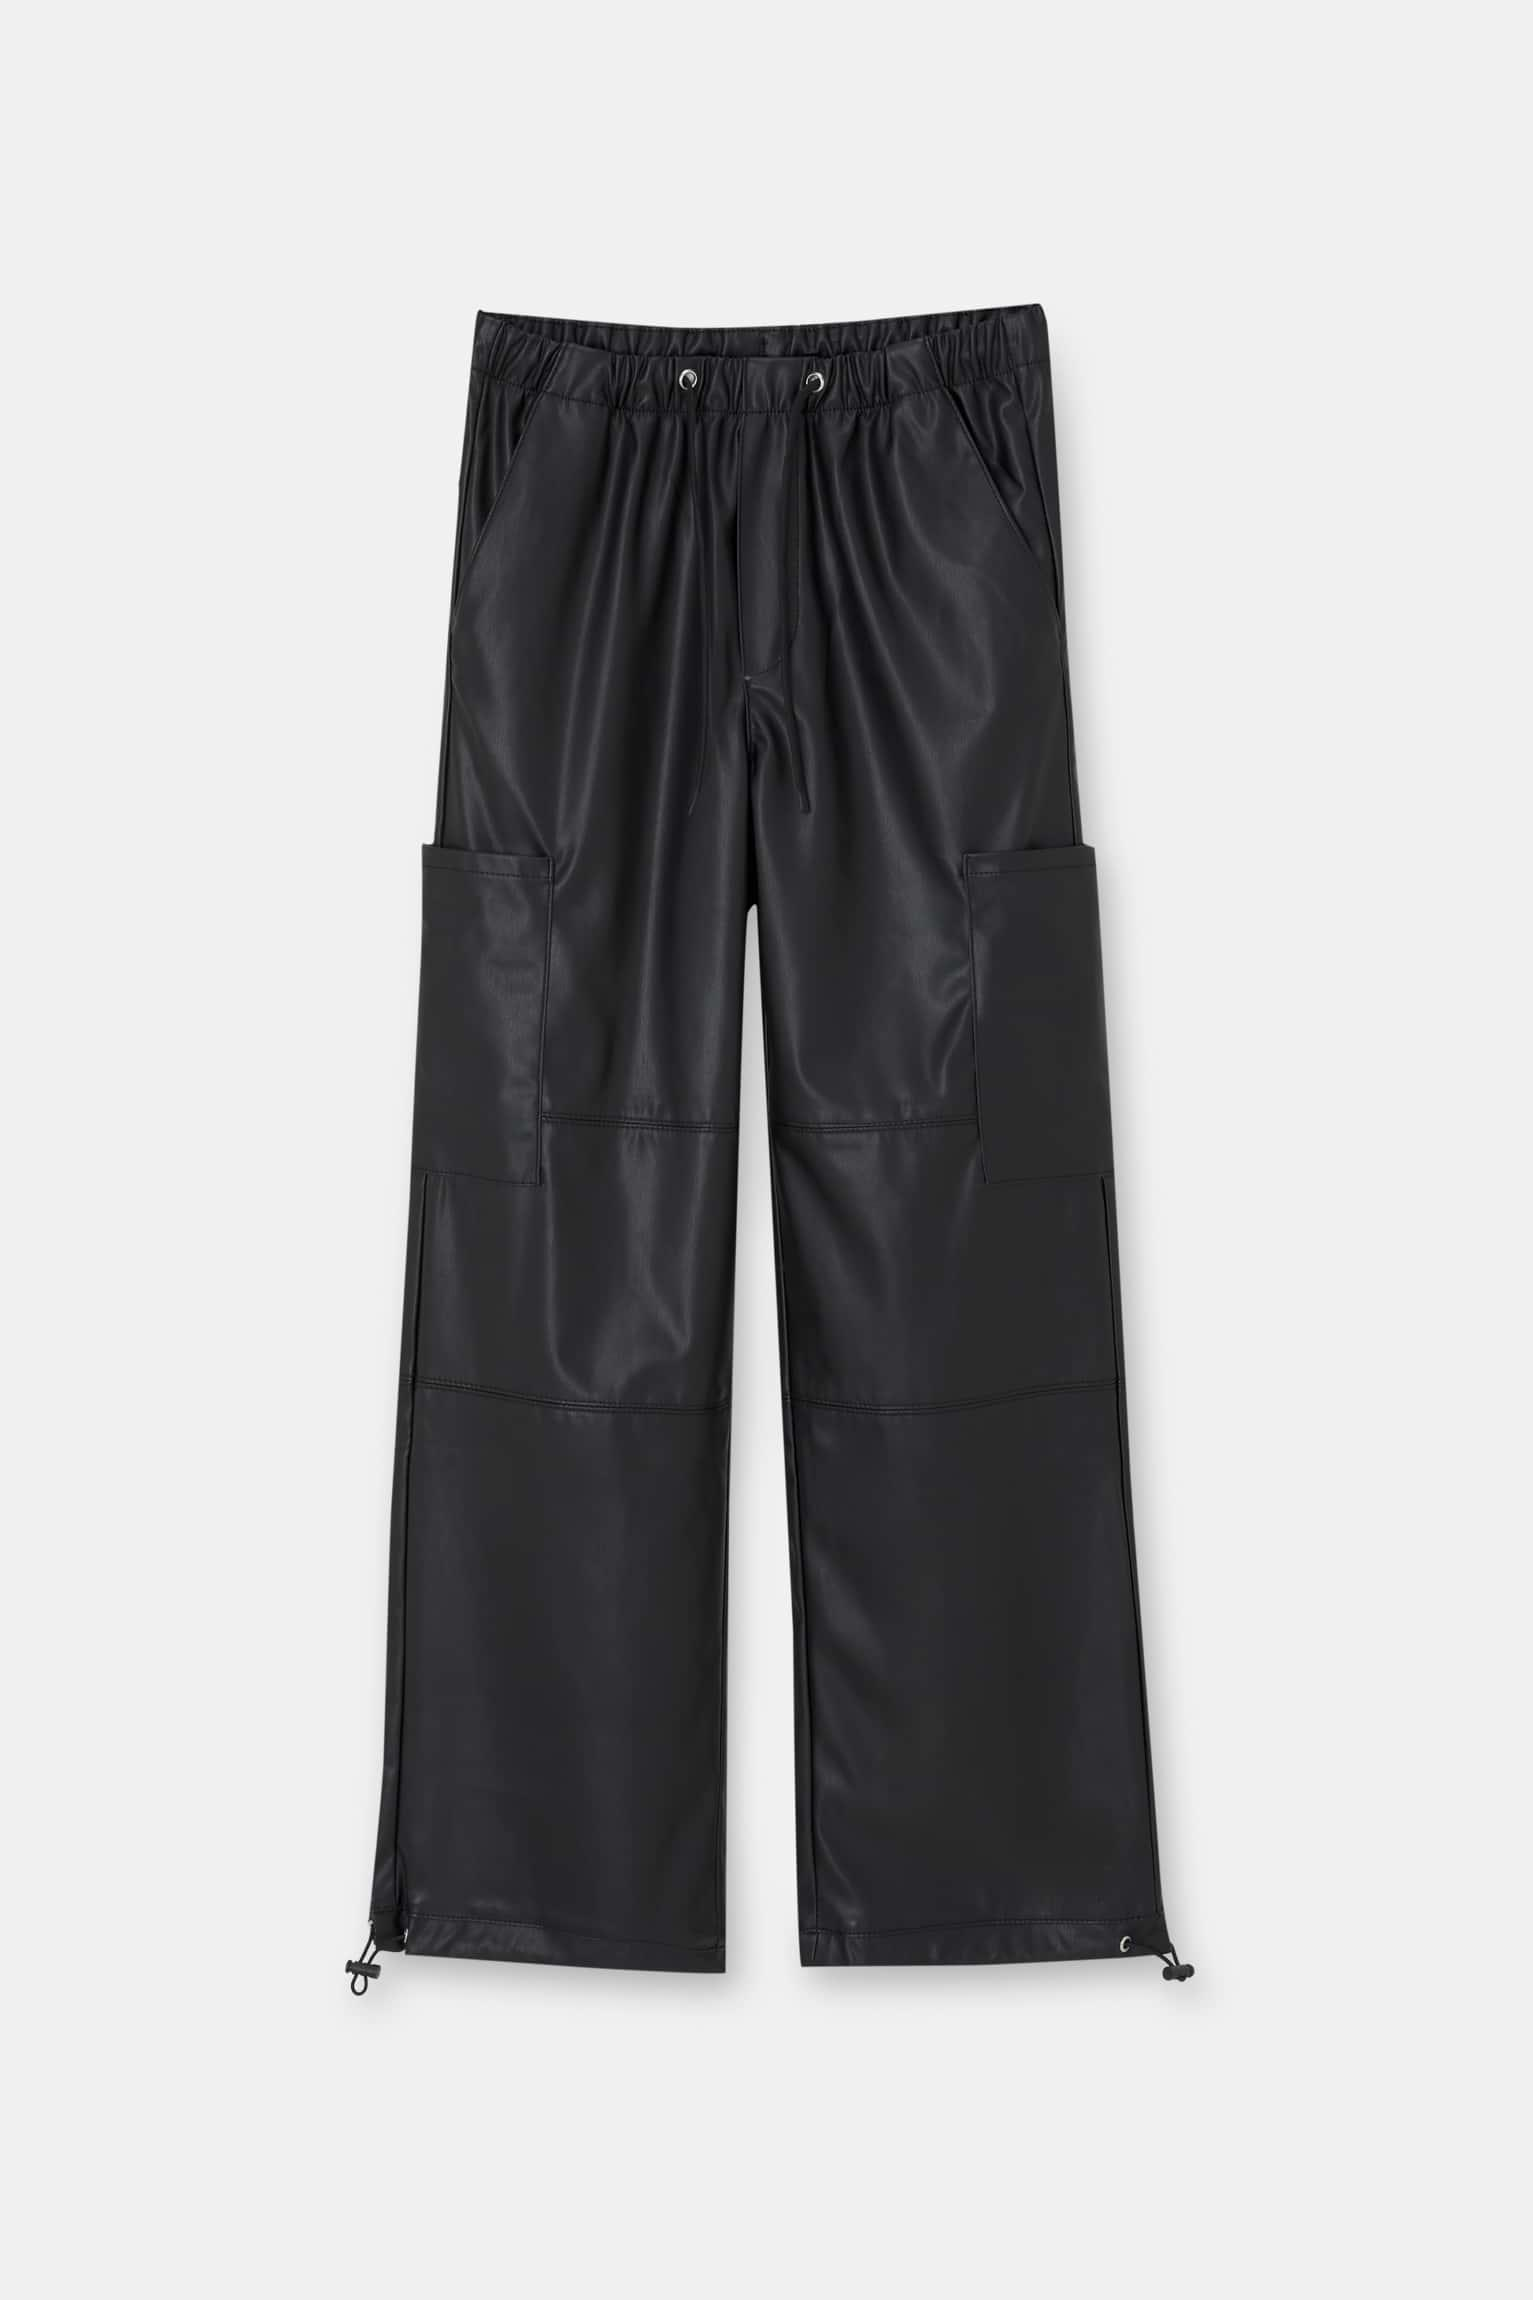 pantalones de cintura elástica de pull and bear jogger 12,99 euros